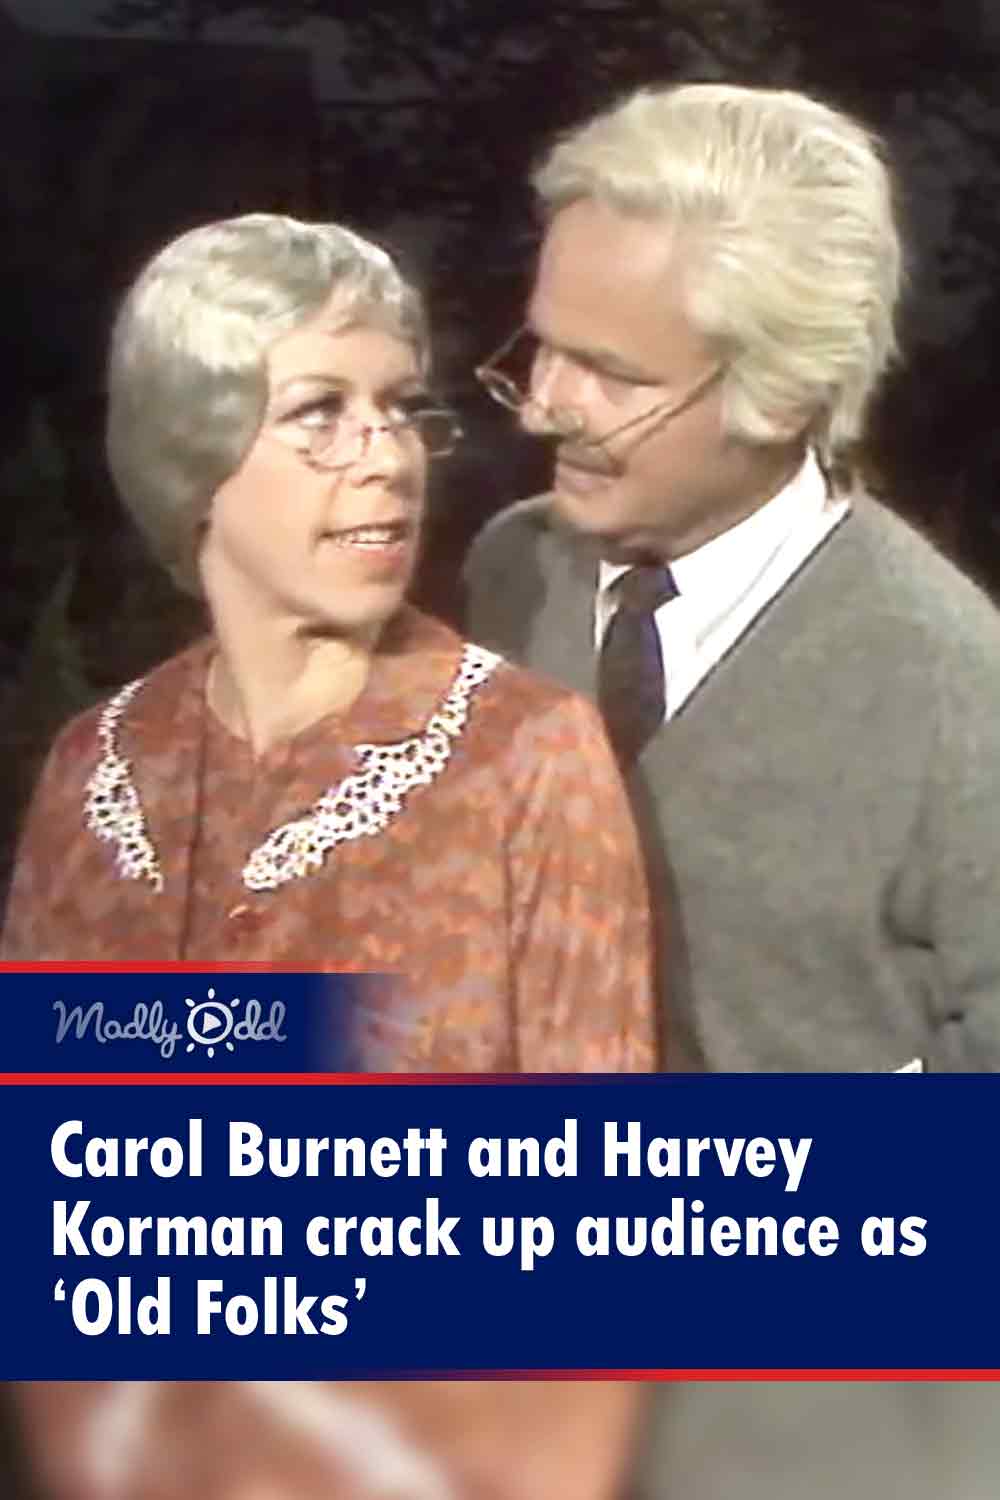 Carol Burnett and Harvey Korman crack up audience as ‘Old Folks’